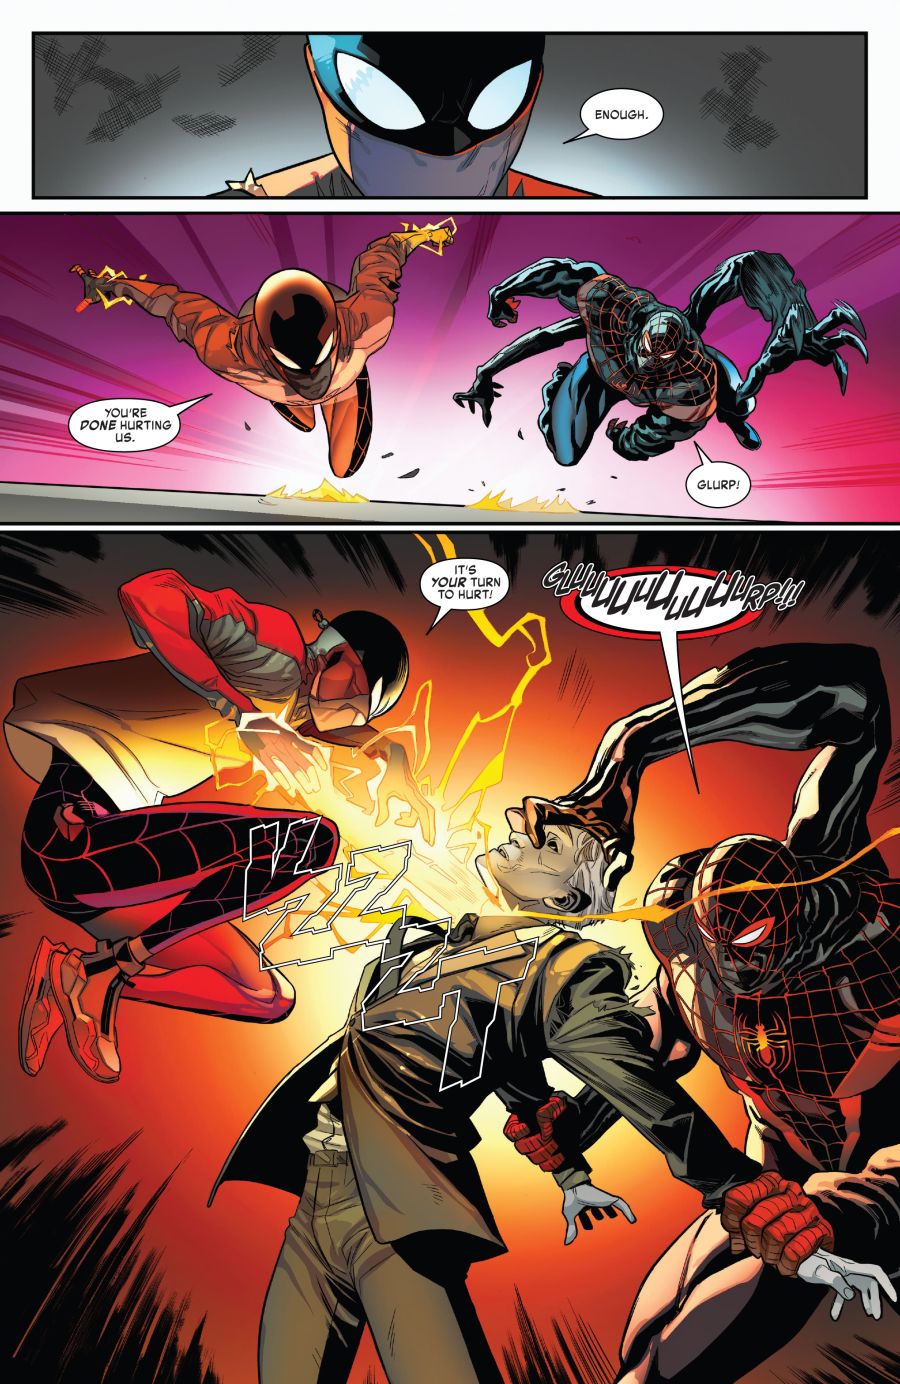 Miles Morales: Spider-Man #35